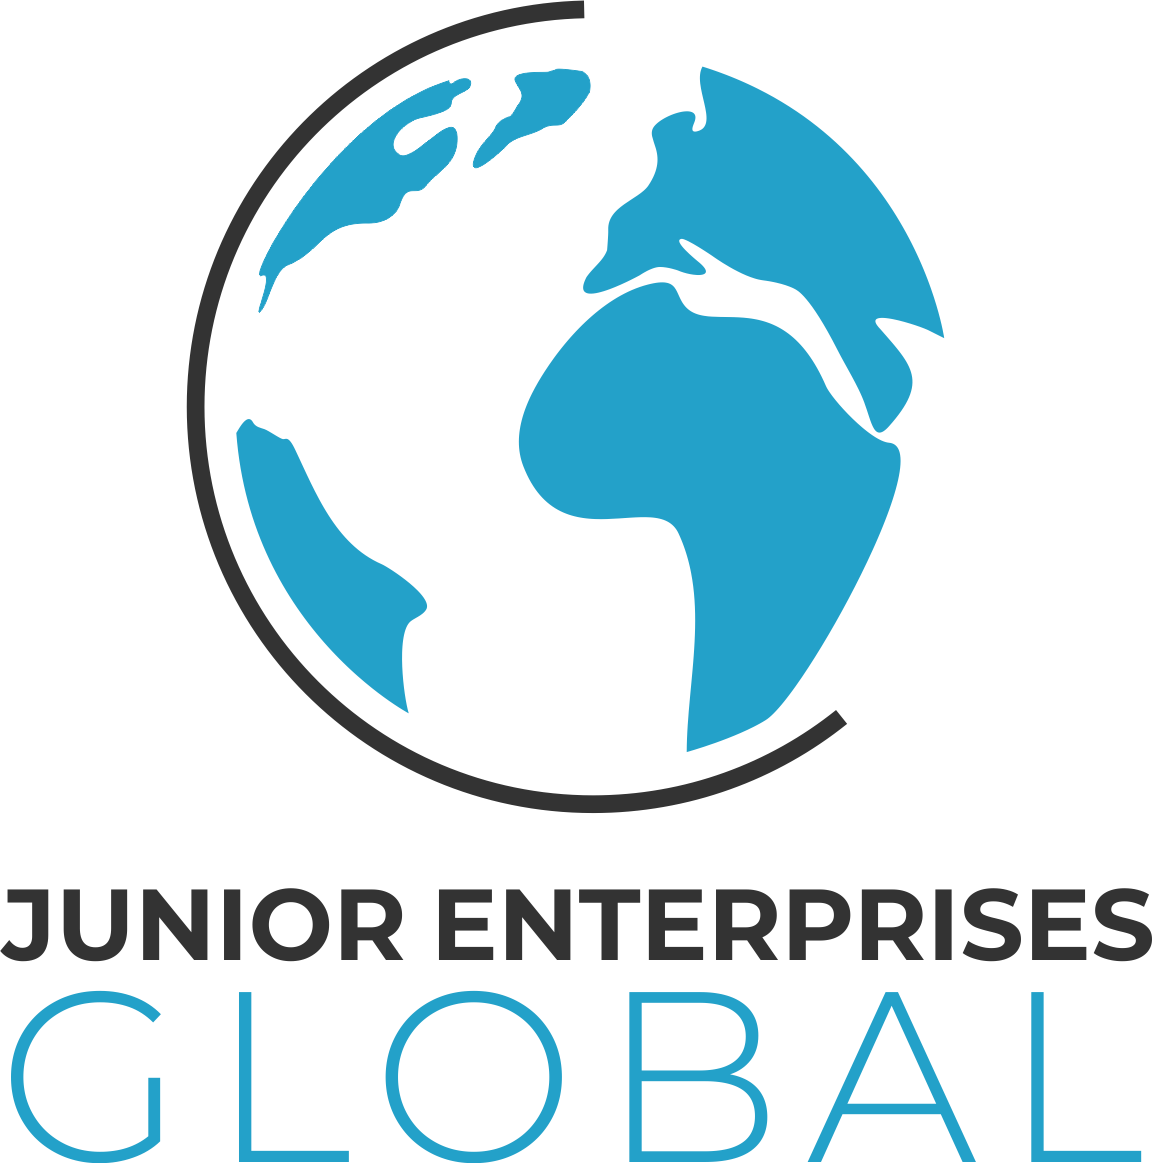 Junior Enterprises Global Logo - Junior Enterprise Global Council Clipart (1152x1163), Png Download